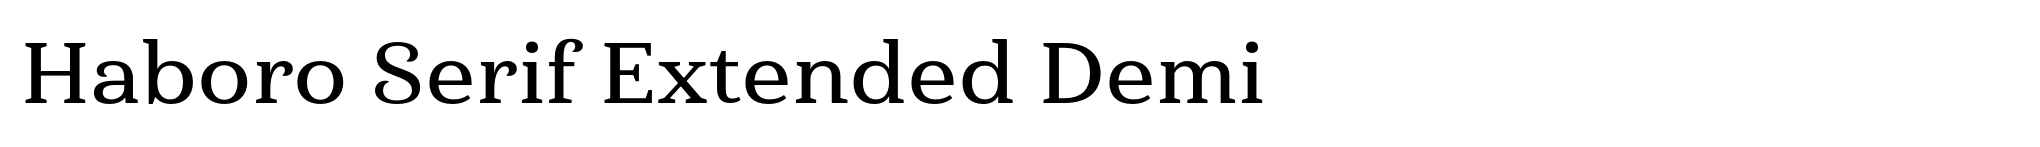 Haboro Serif Extended Demi image